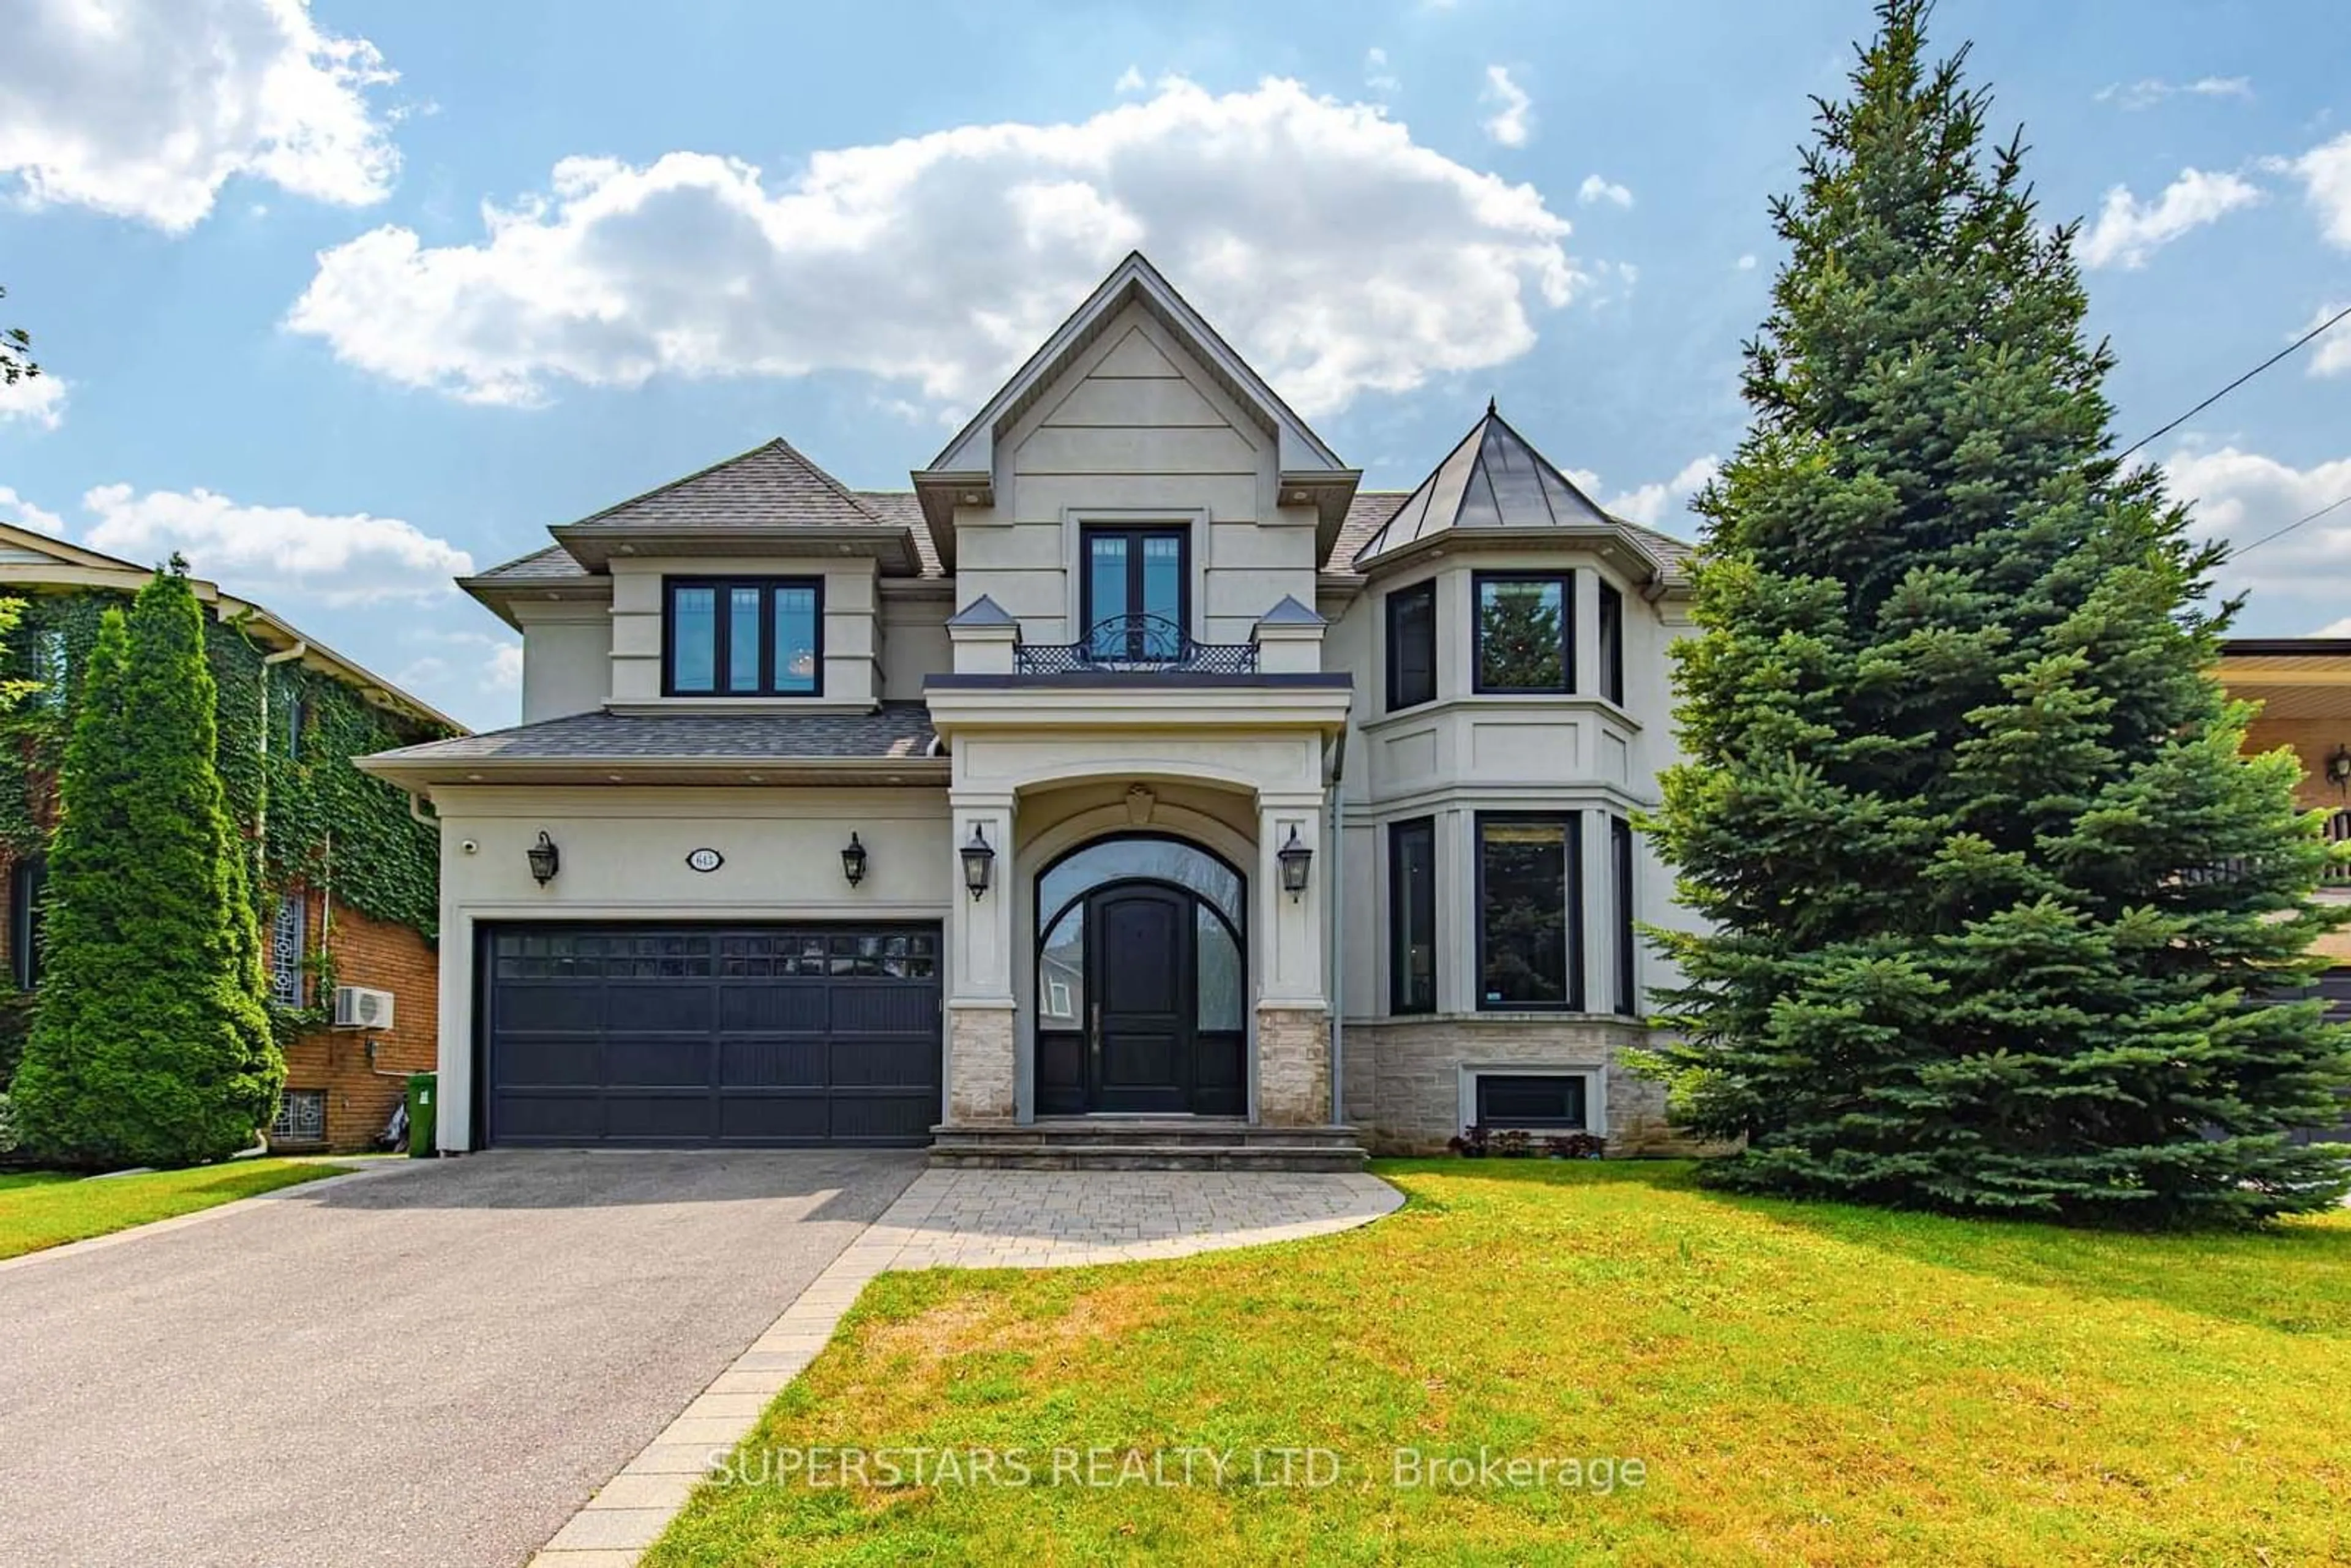 Home with brick exterior material for 643 Glencairn Ave, Toronto Ontario M6B 1Z6